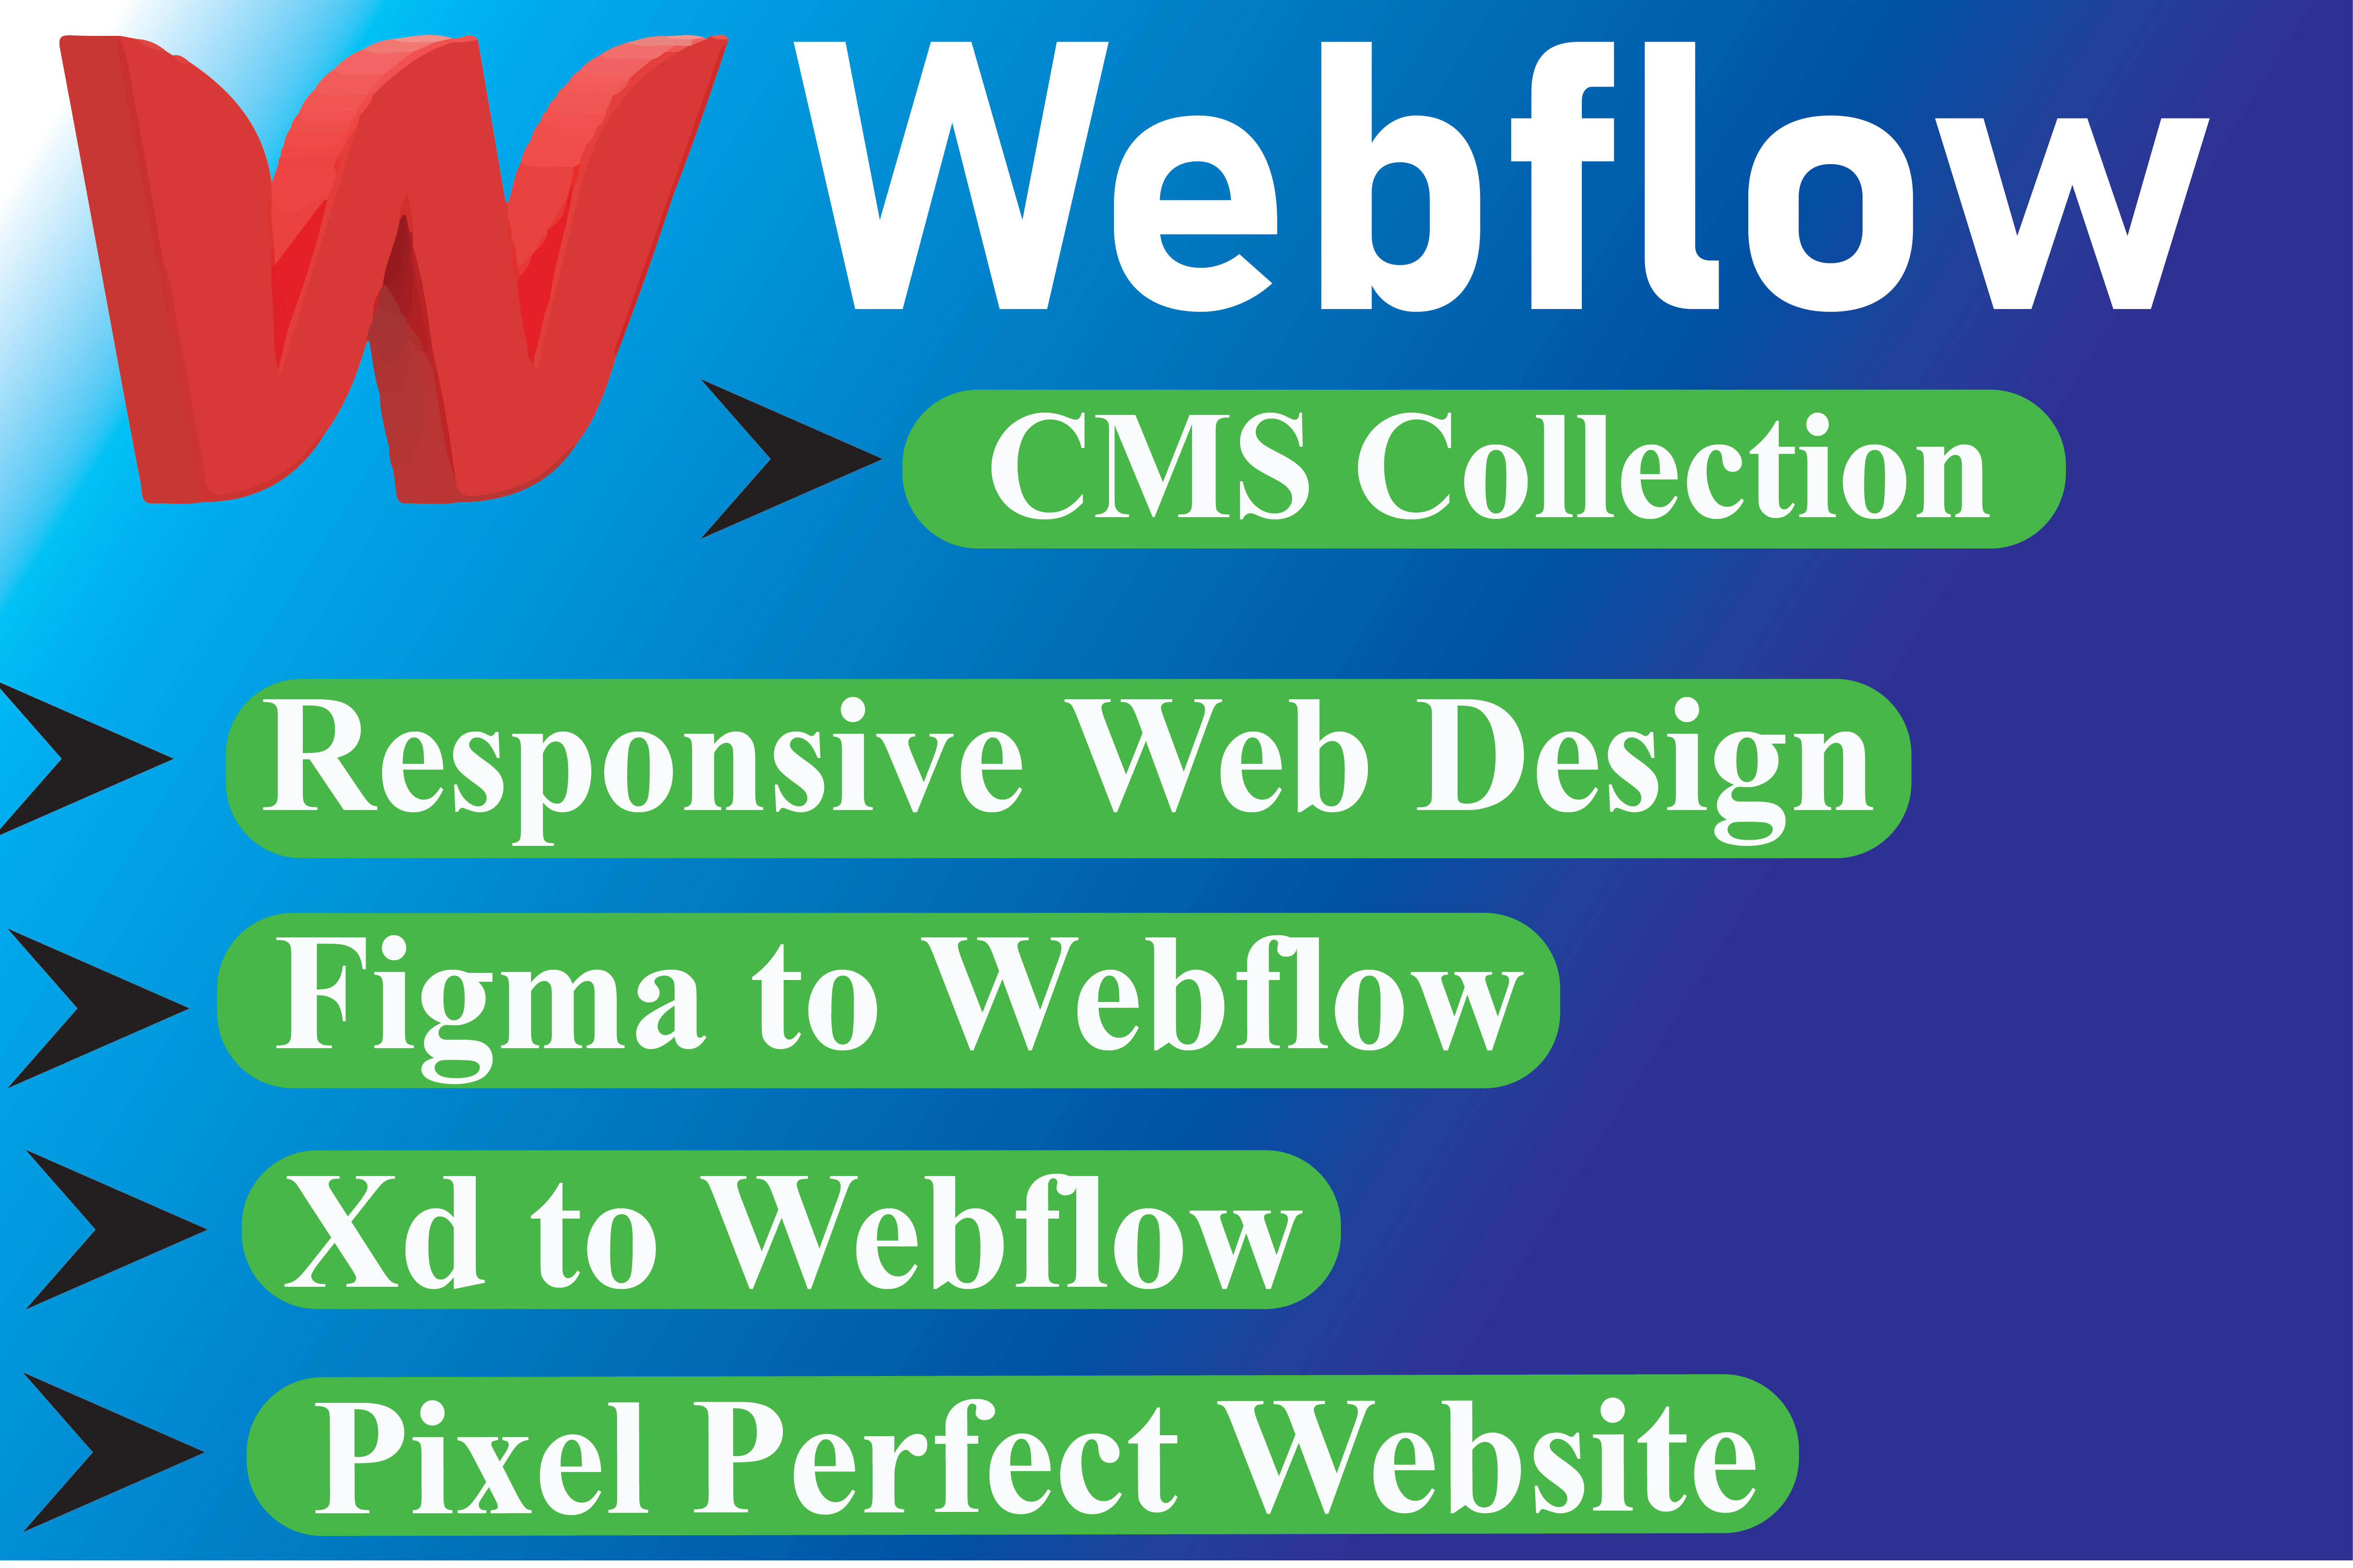 Portfolio for Webflow website design and developer